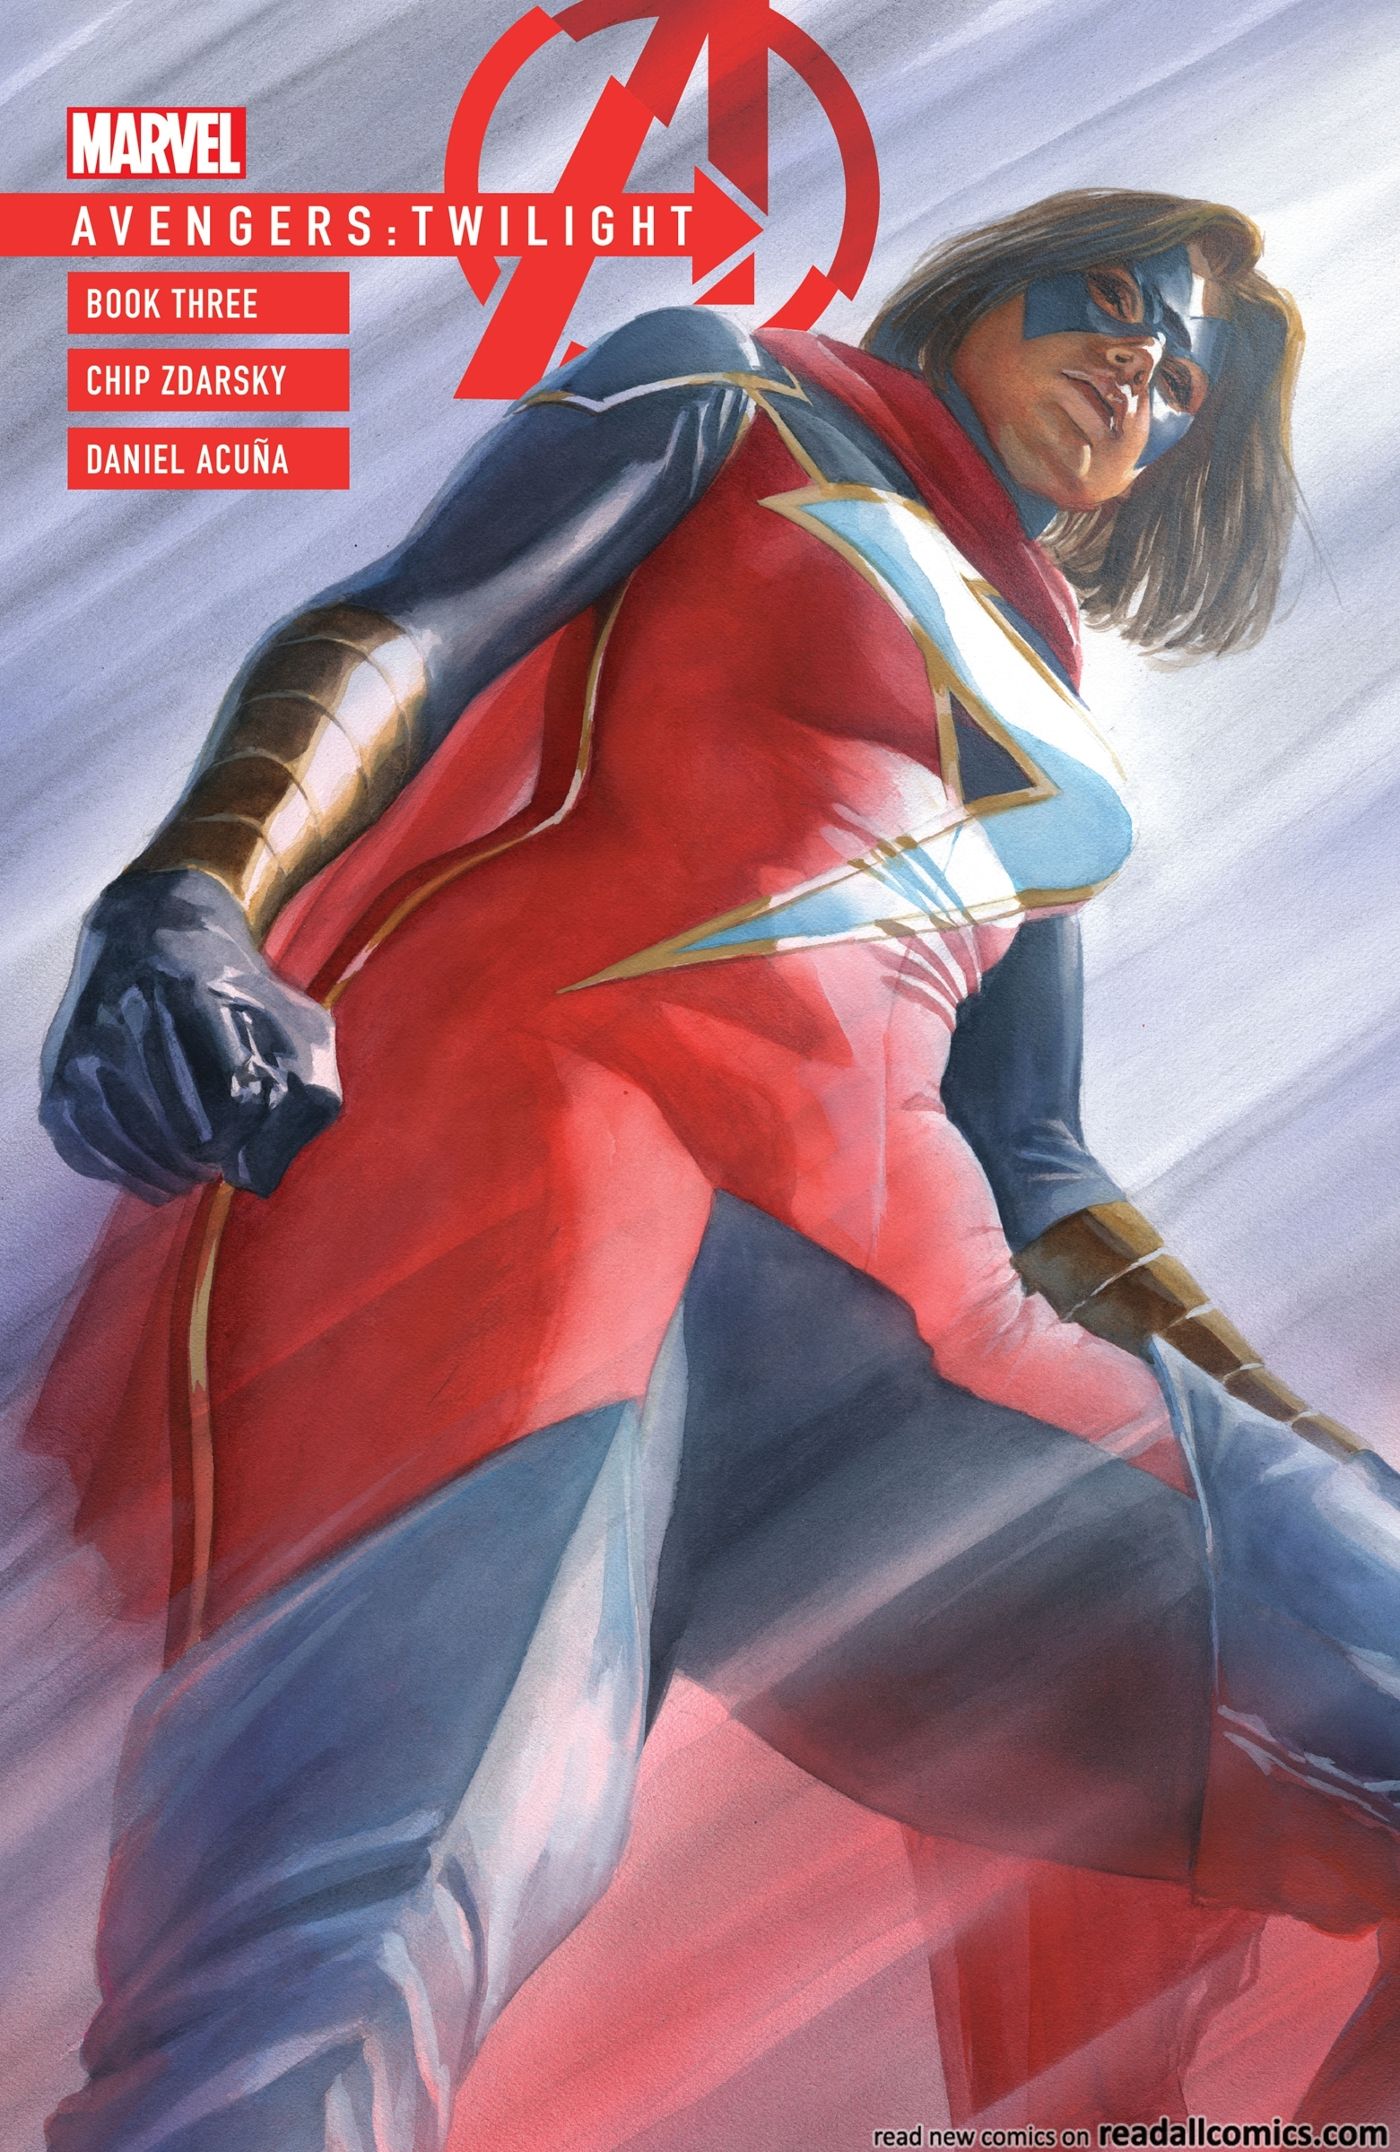 Kamala Khan as Ms. Marvel on the cover of Avengers Twilight #3